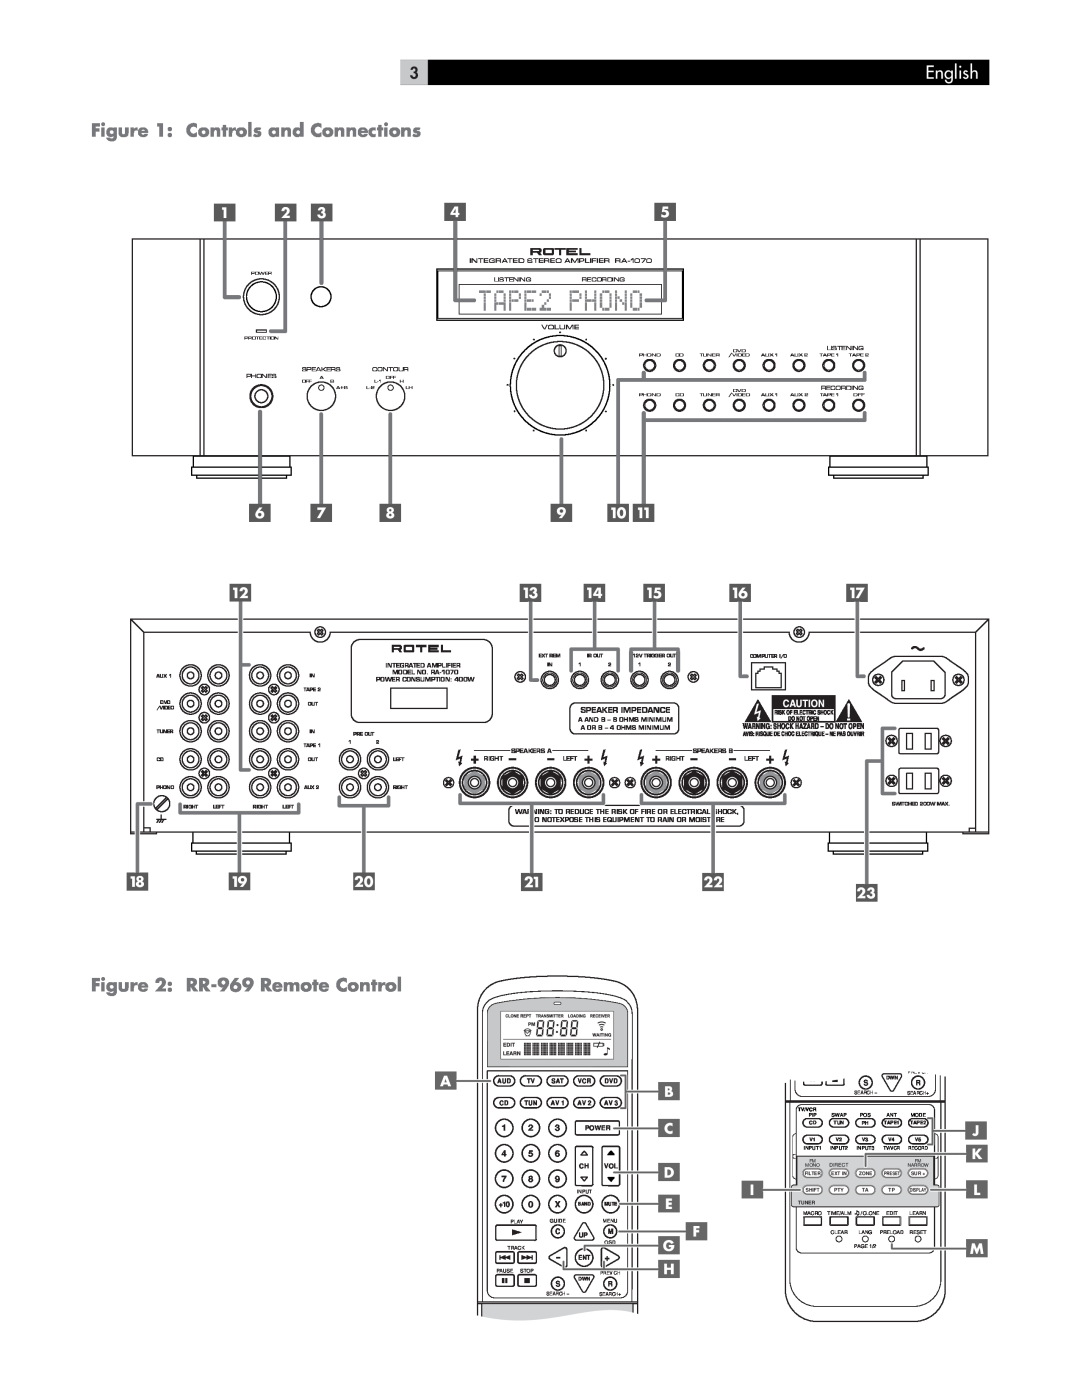 Rotel RA-1070 owner manual English, Controls and Connections, RR-969Remote Control, 1617, 2122, B C D I E F G H, J K L M 